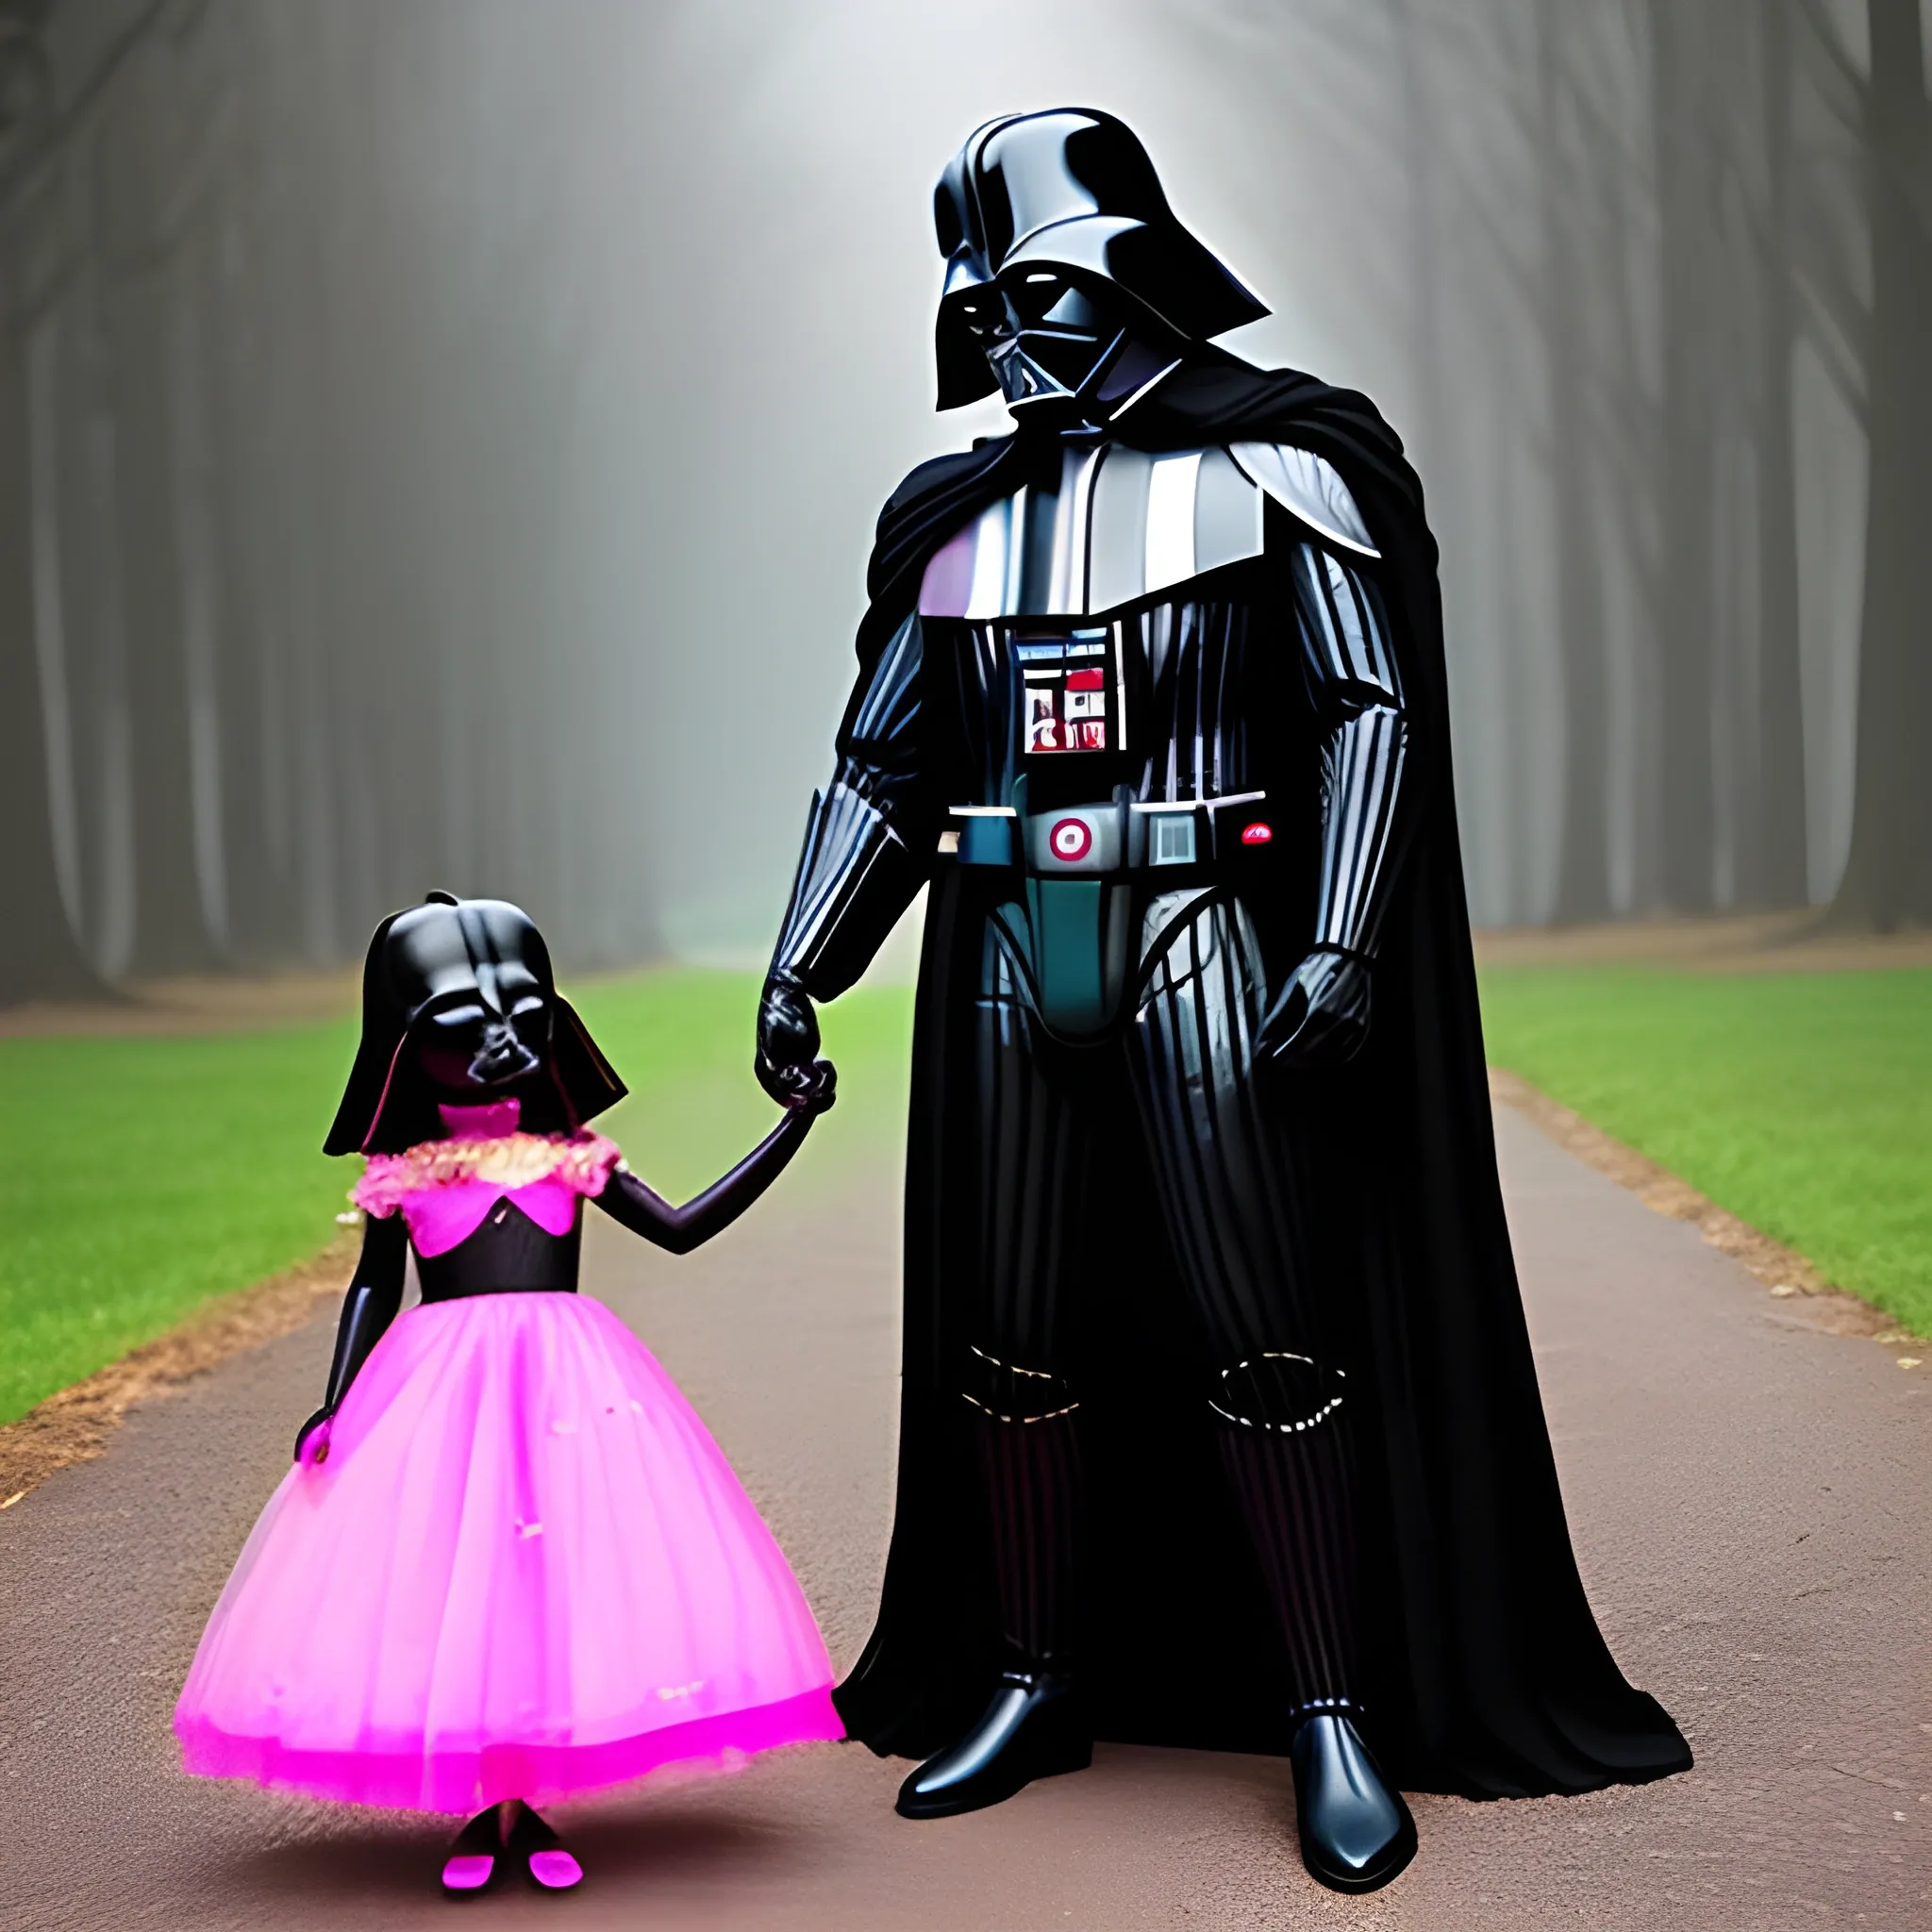 a dark vader father, a dark vader mother in a pink dress, a dark vader child in a picnic